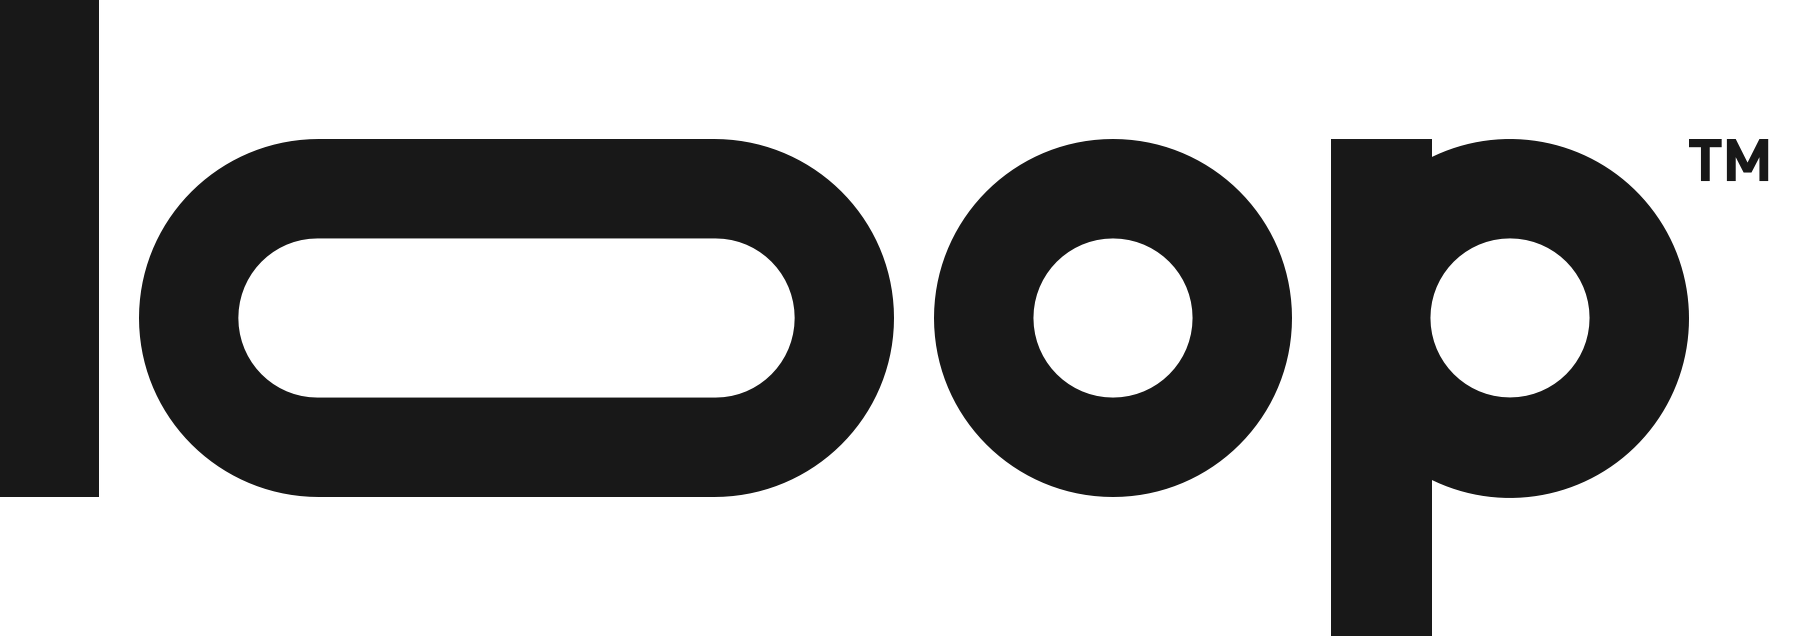 Logo infinity loop by loleden on DeviantArt